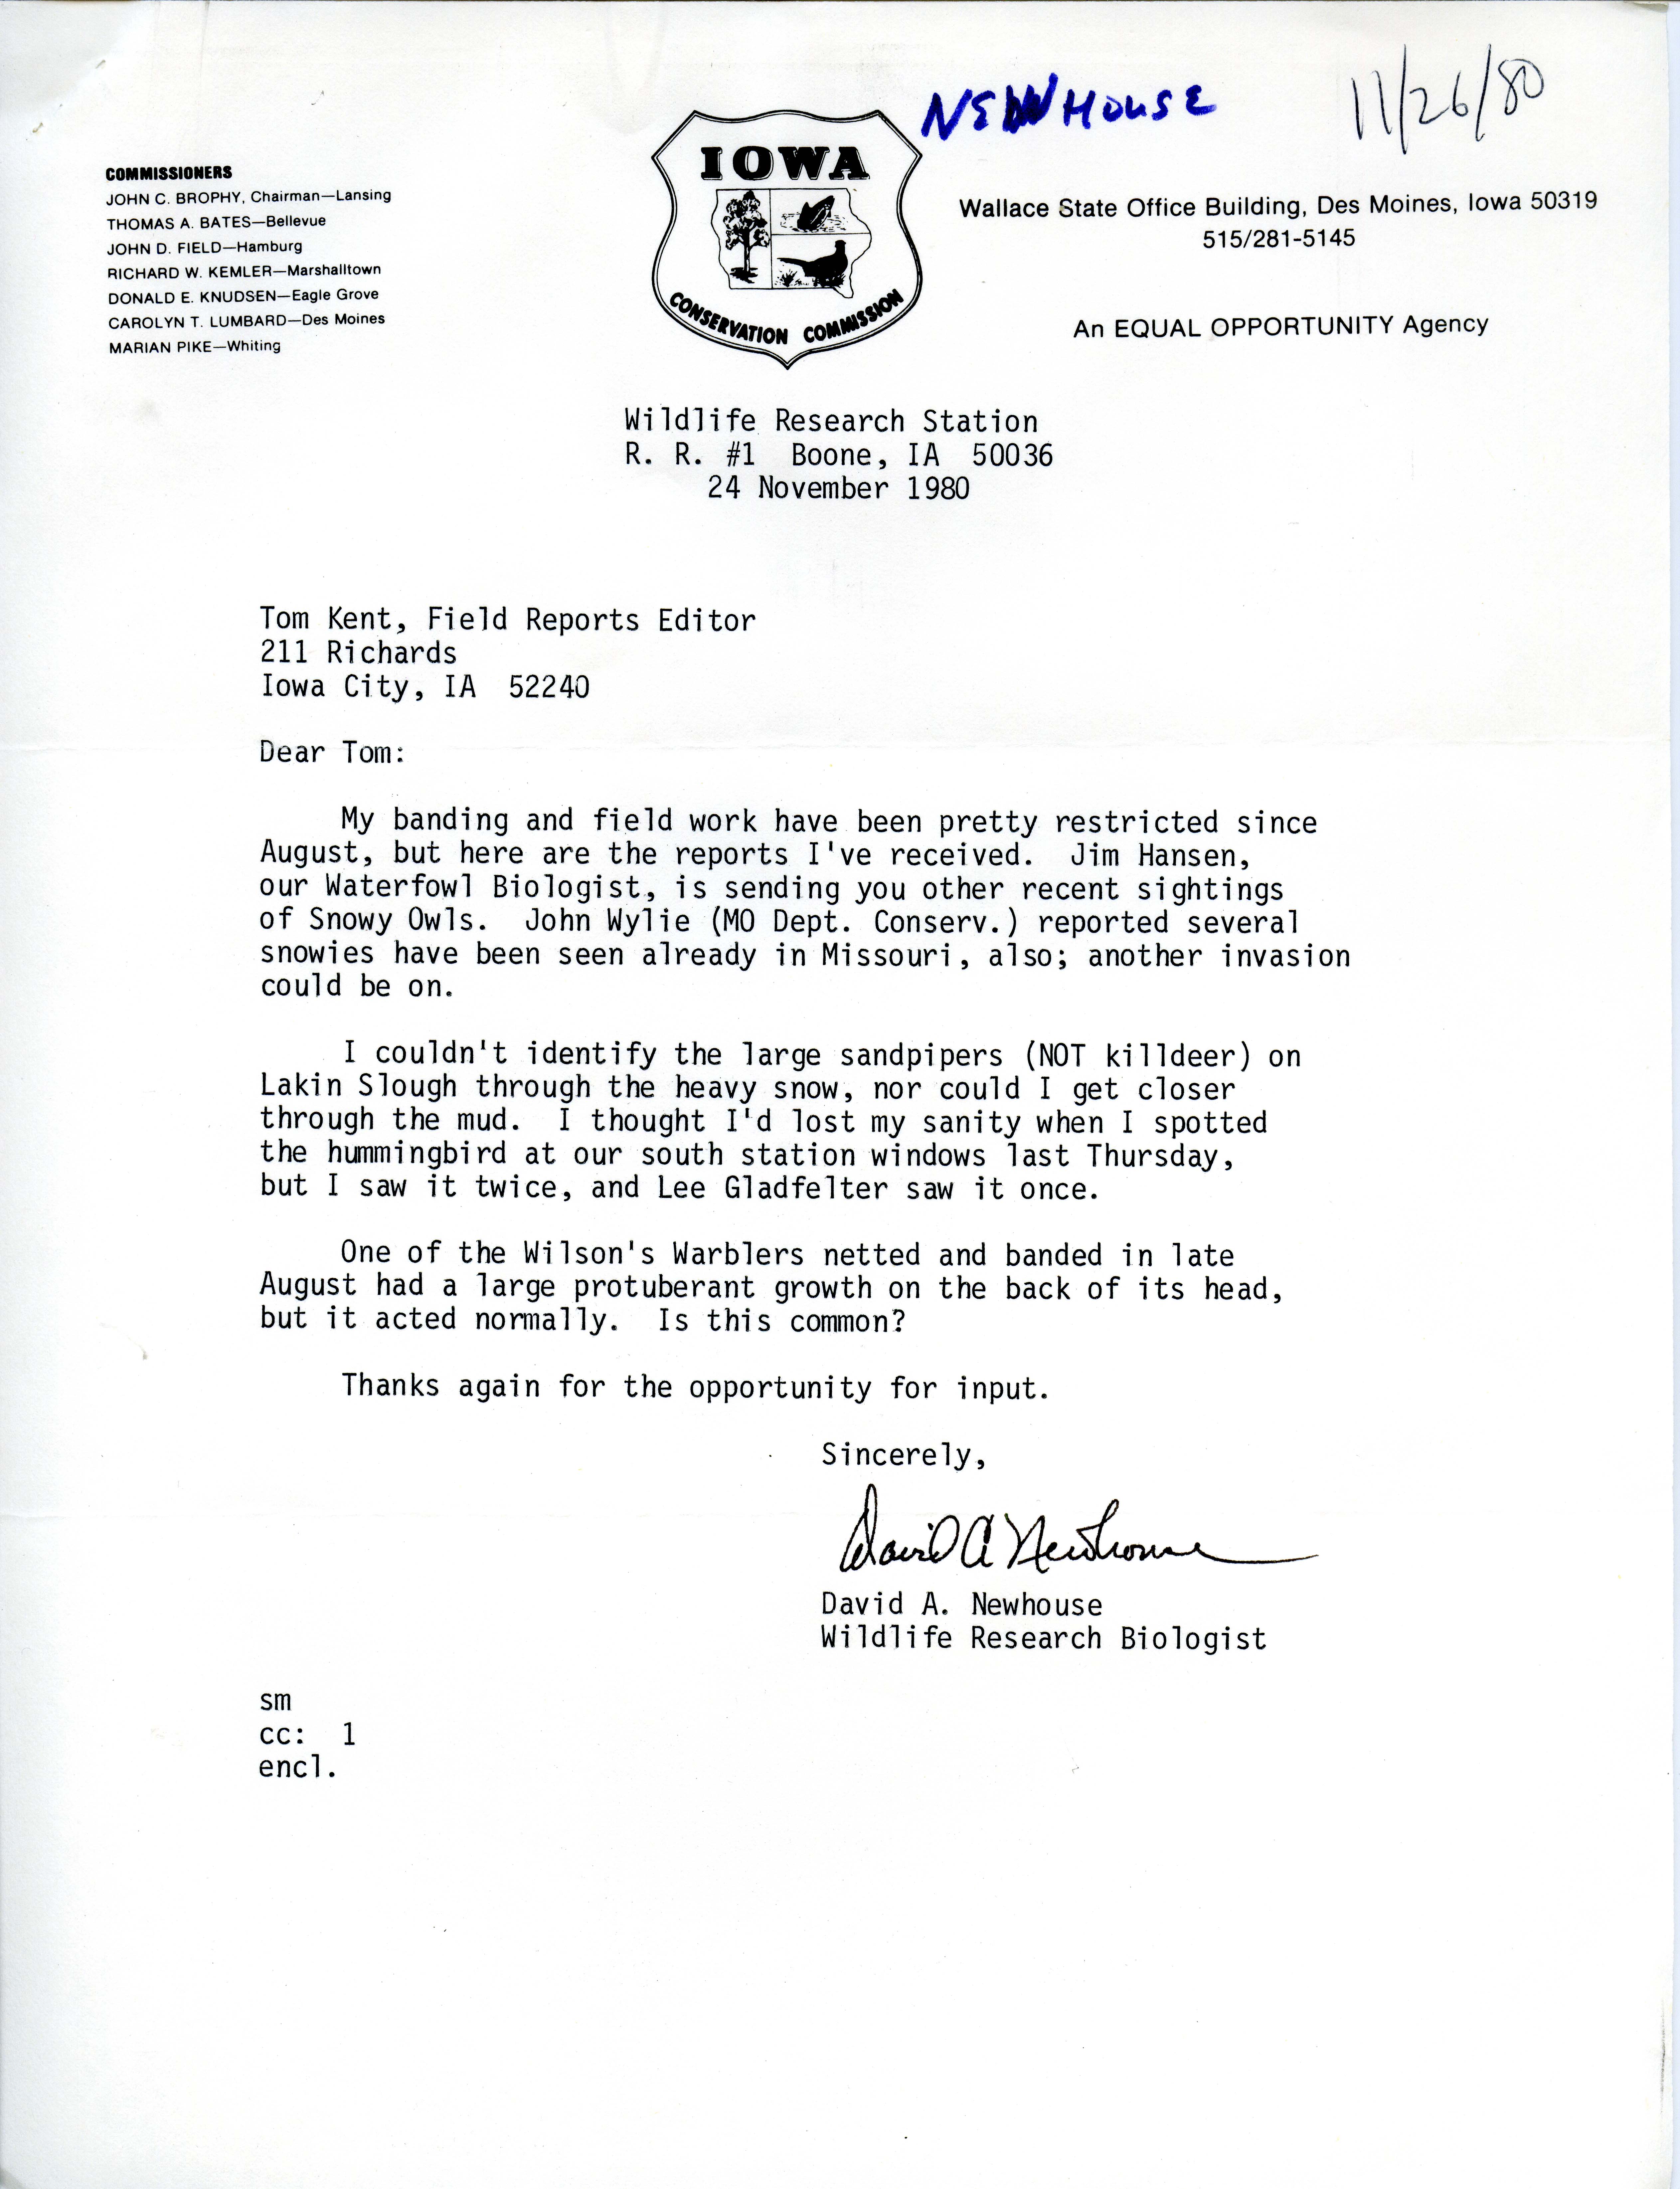 David A. Newhouse letter to Thomas Kent regarding Fall birds sighted, November 24, 1980